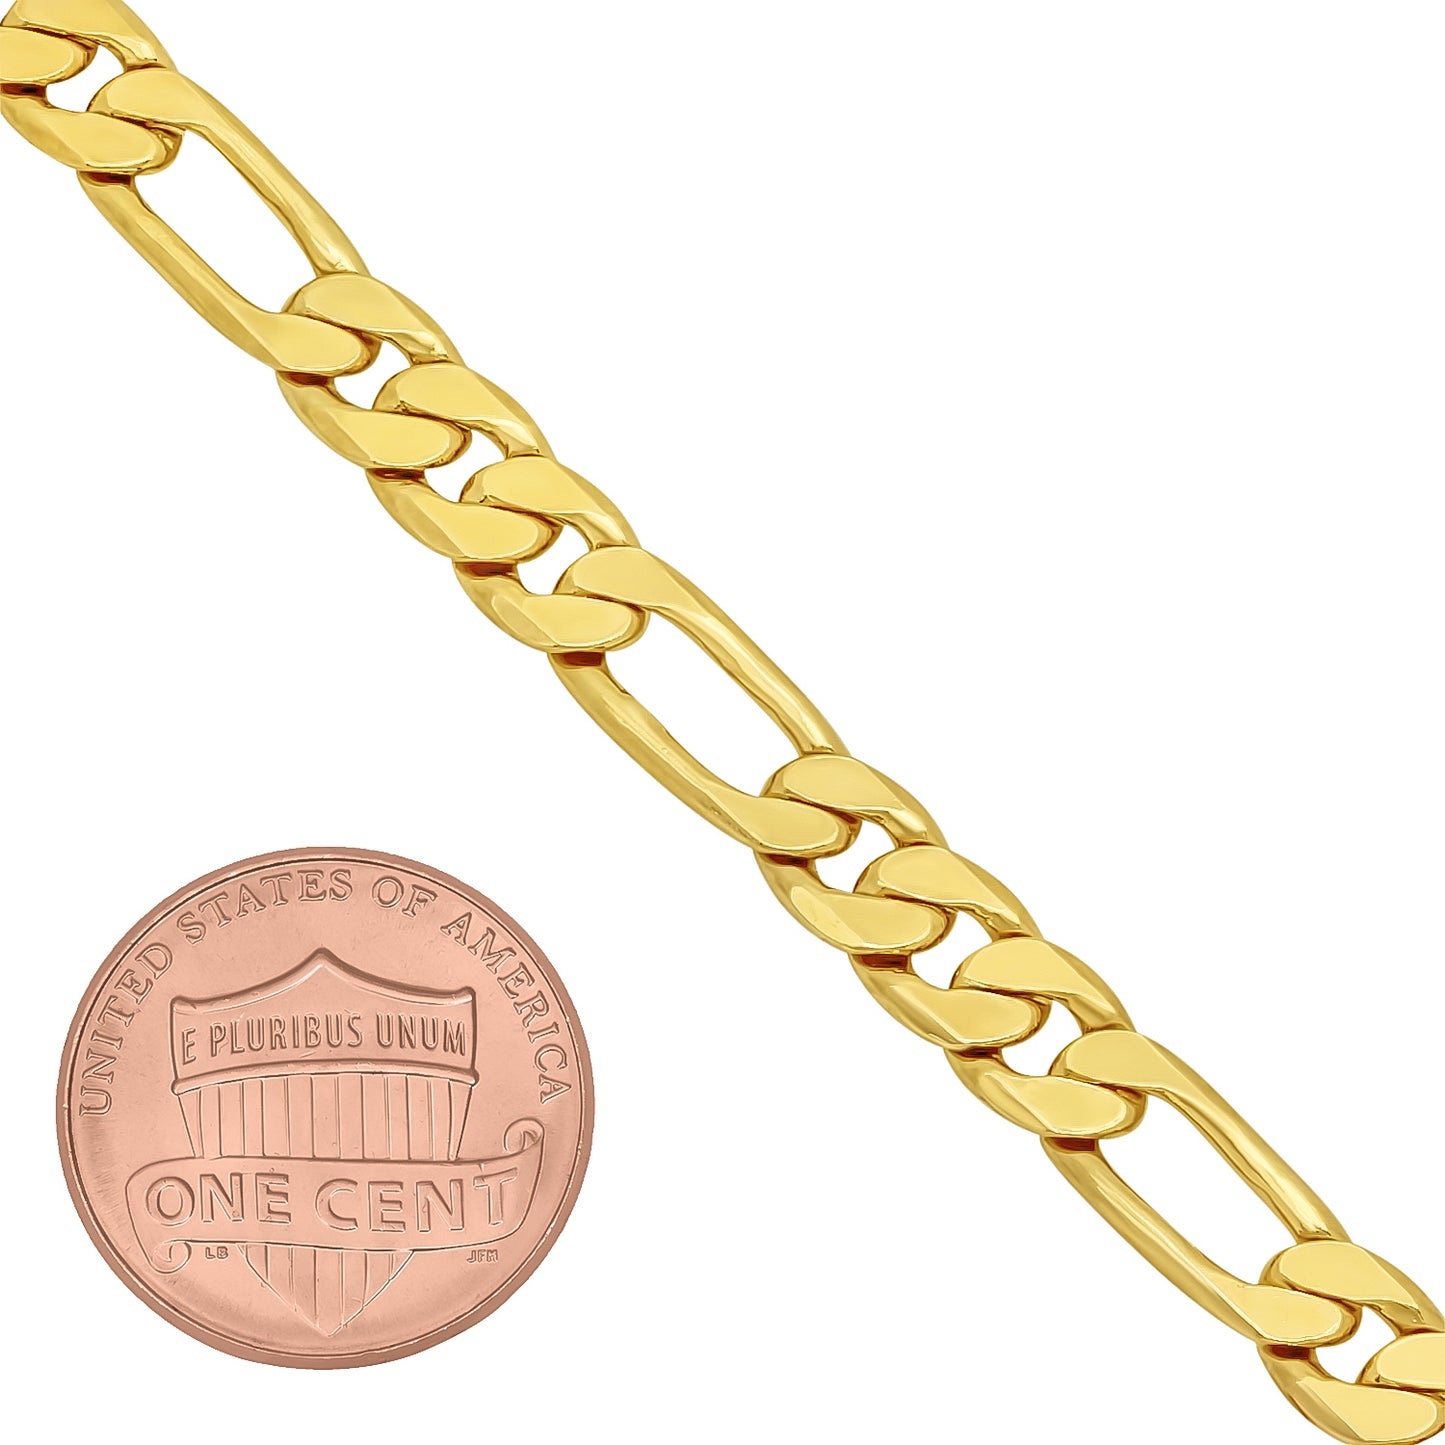 6mm 14k Yellow Gold Plated Flat Figaro Chain Bracelet (SKU: GFC107B)